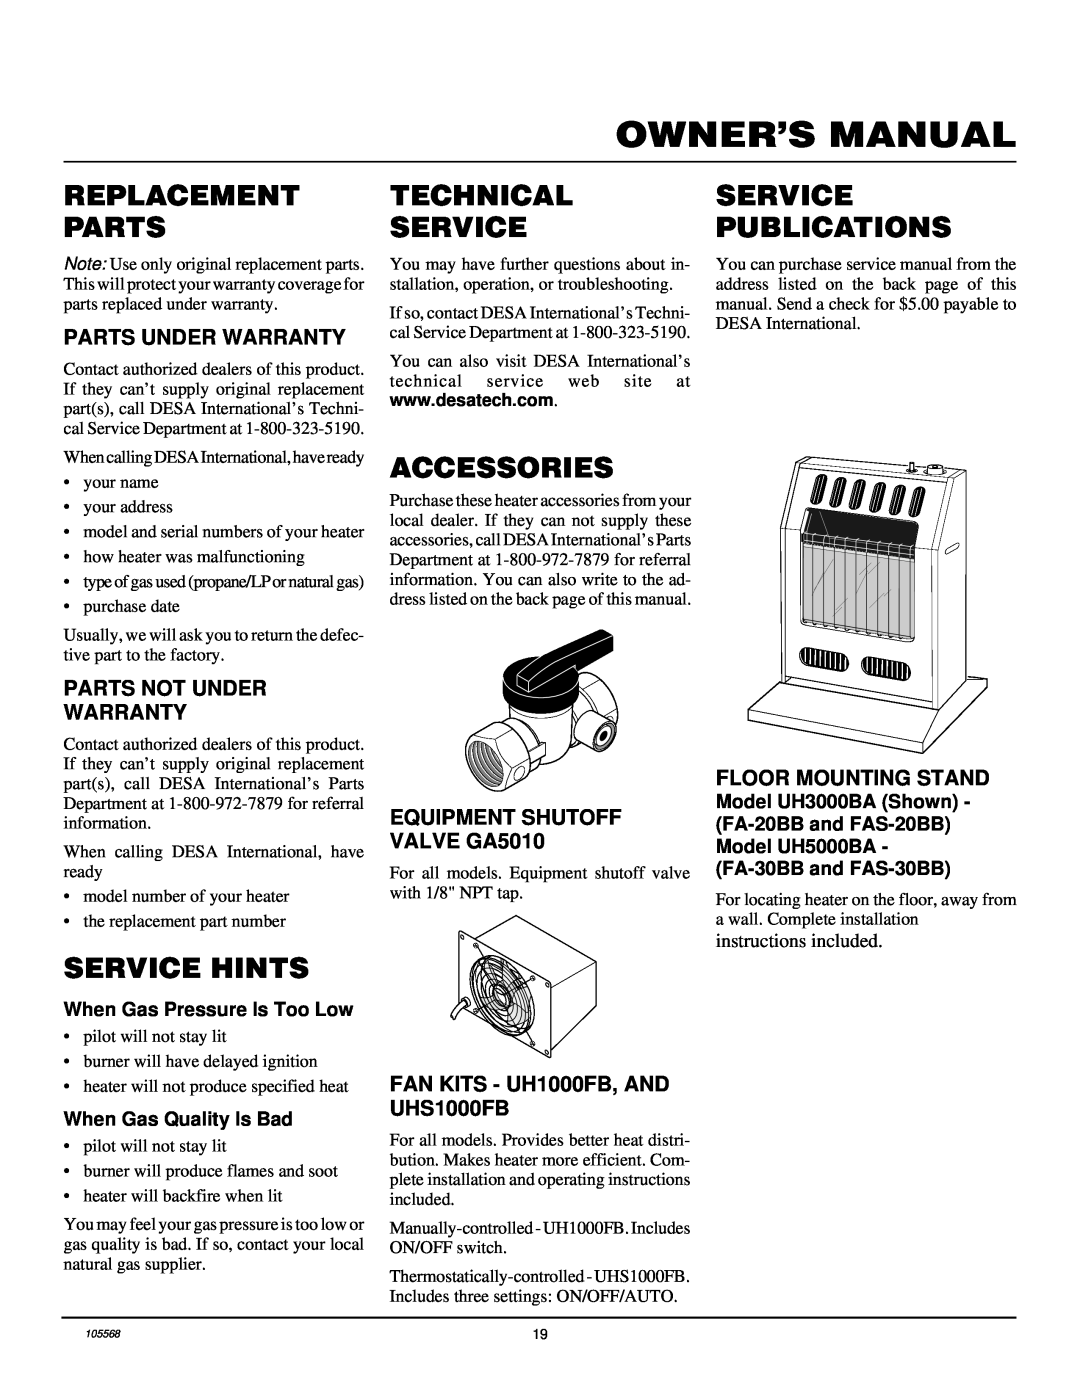 Desa FA-30BB Replacement Parts, Service Hints, Technical Service, Accessories, Service Publications, Parts Under Warranty 